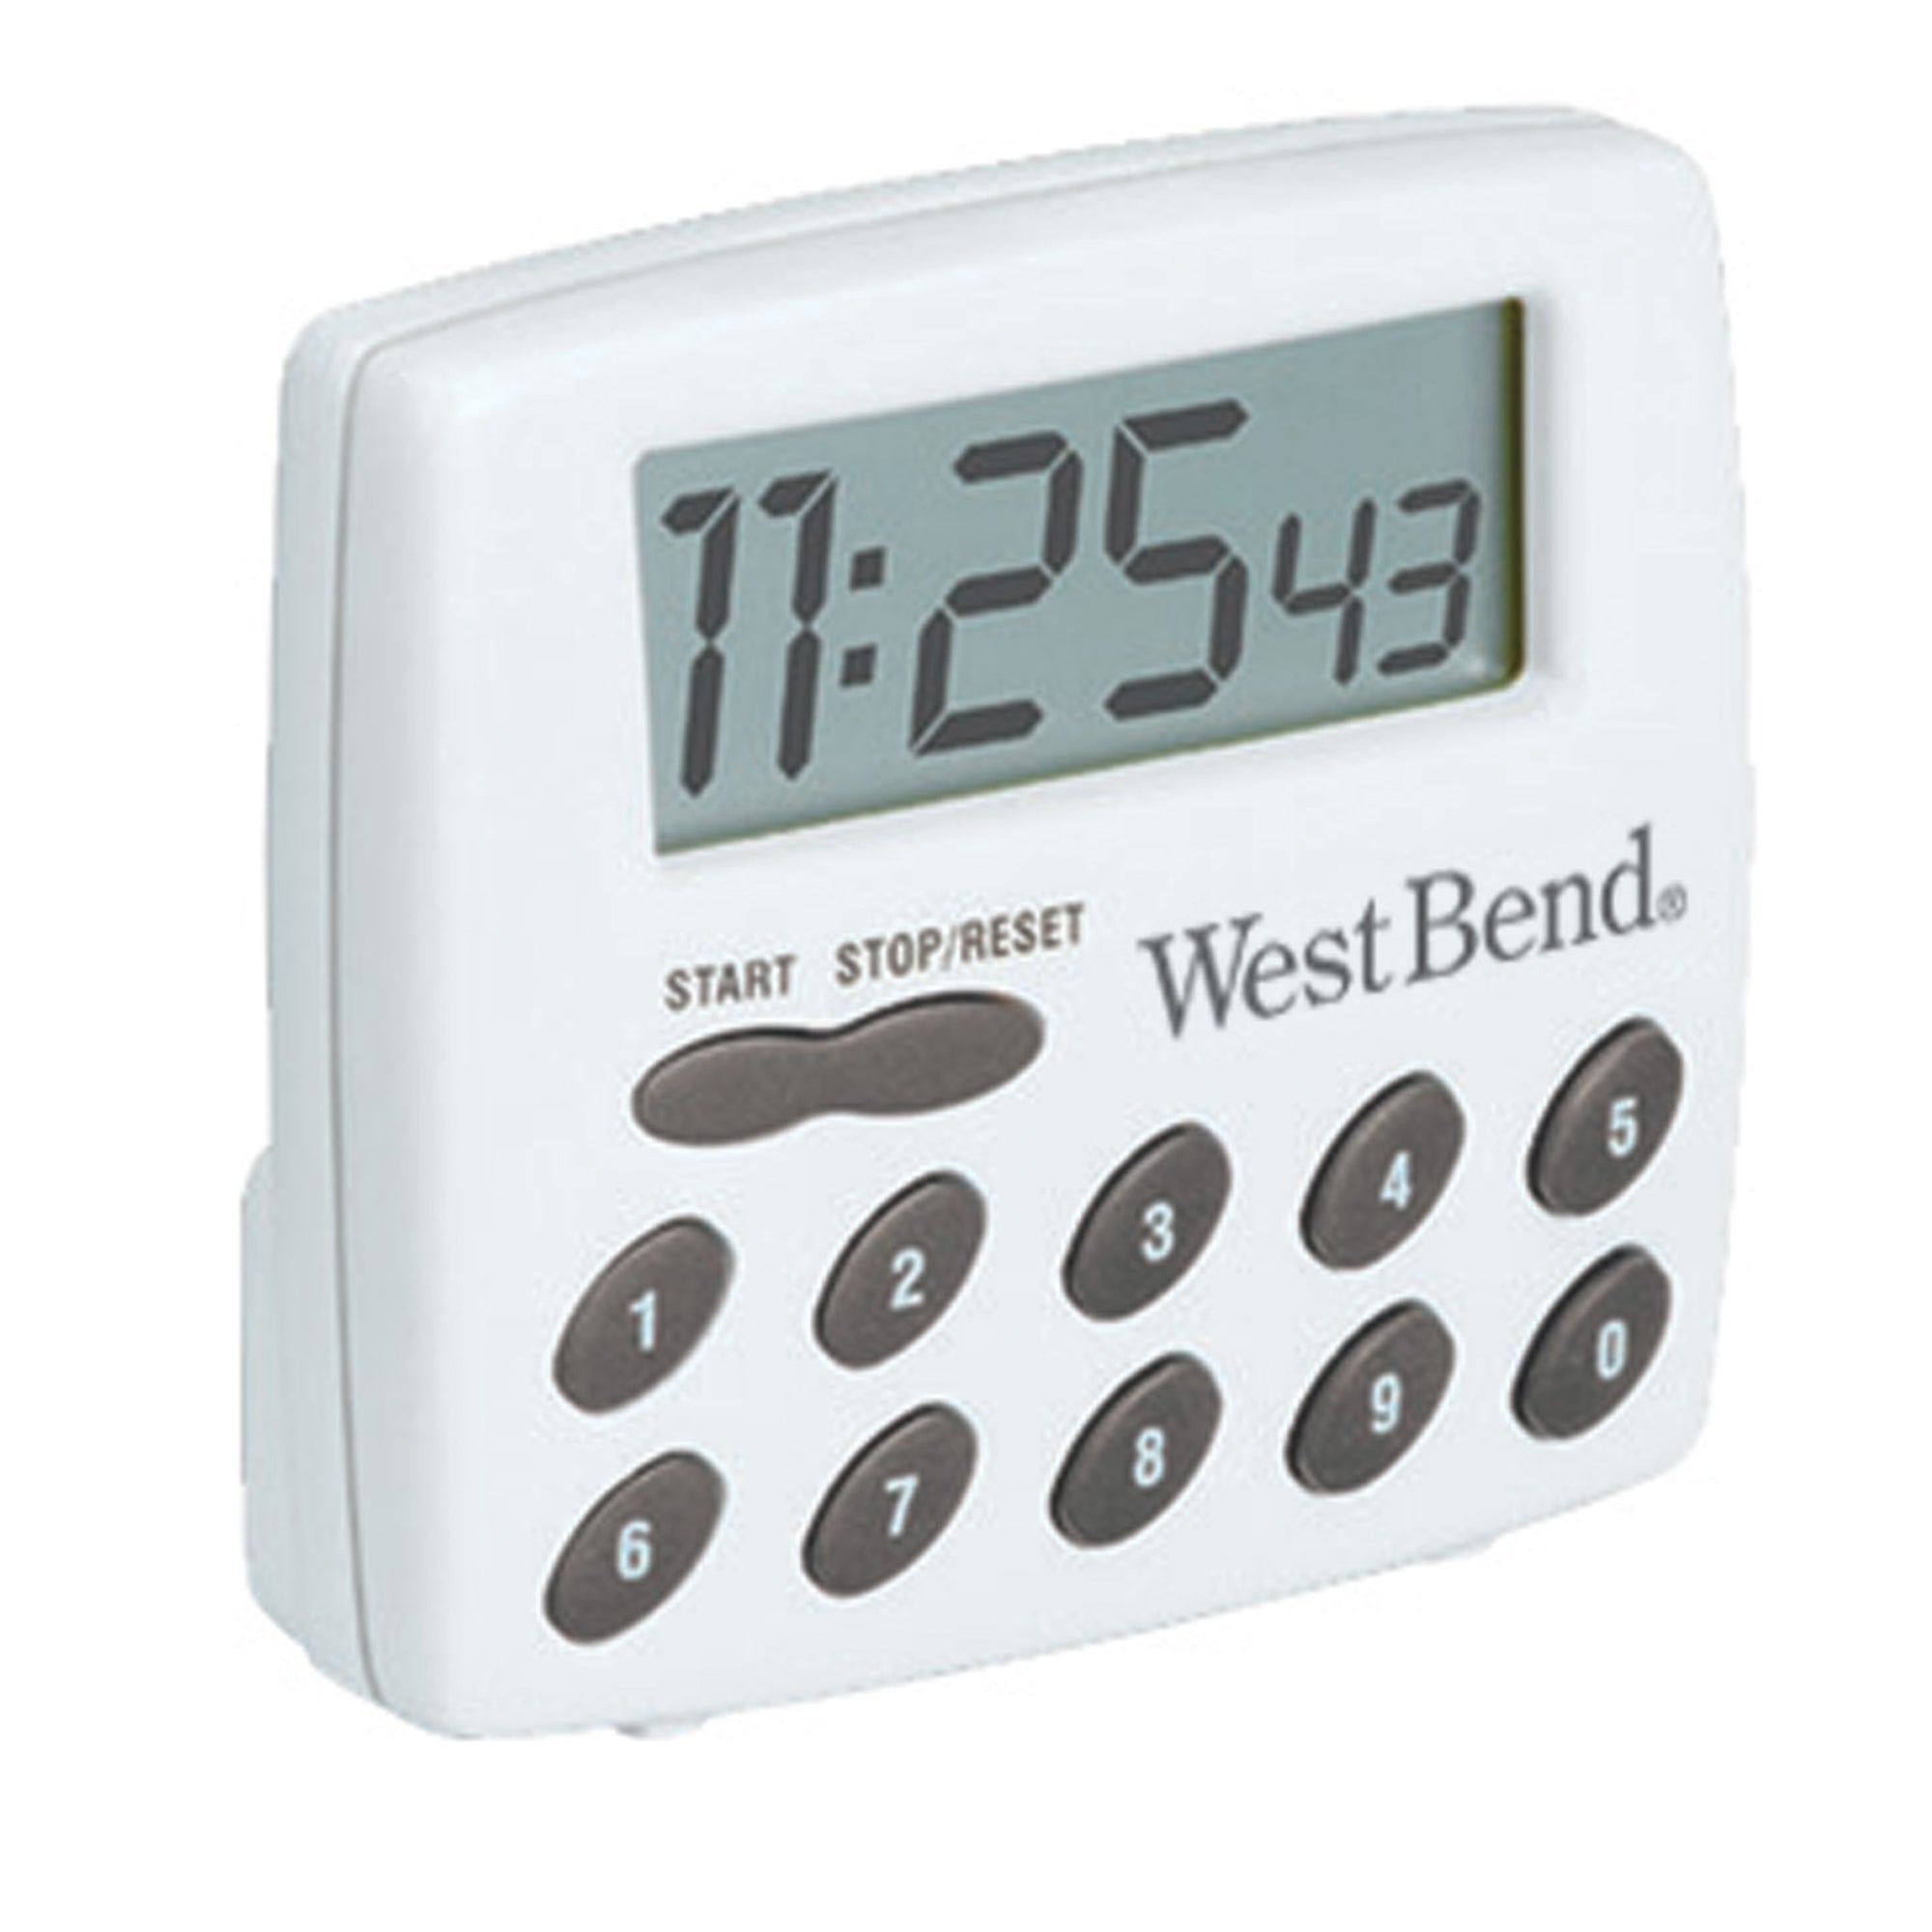 West Bend Versatile 100 Hour Kitchen Timer and Clock